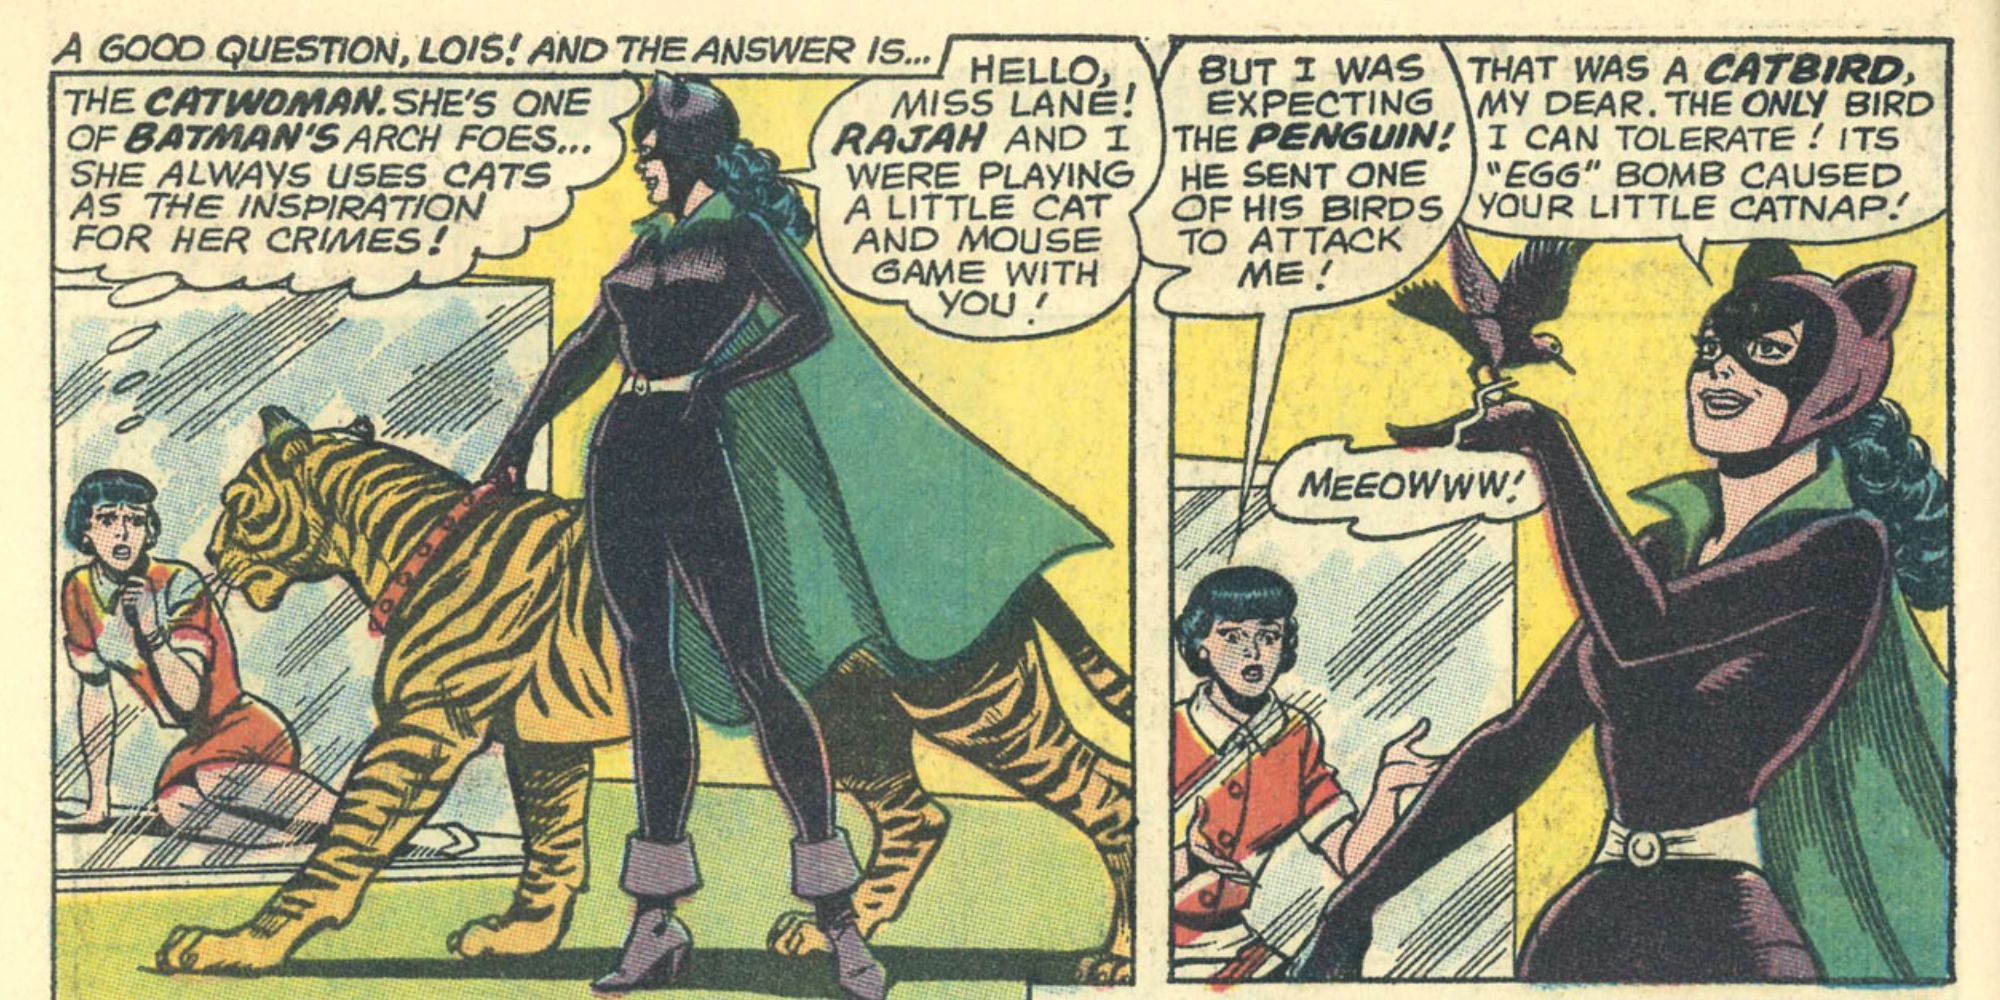 Catwoman captura Lois Lane na DC Comics.